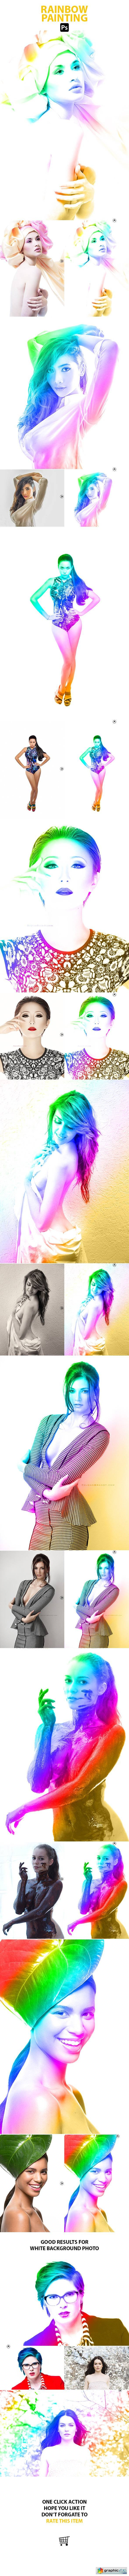 Rainbow Painting Photoshop Action